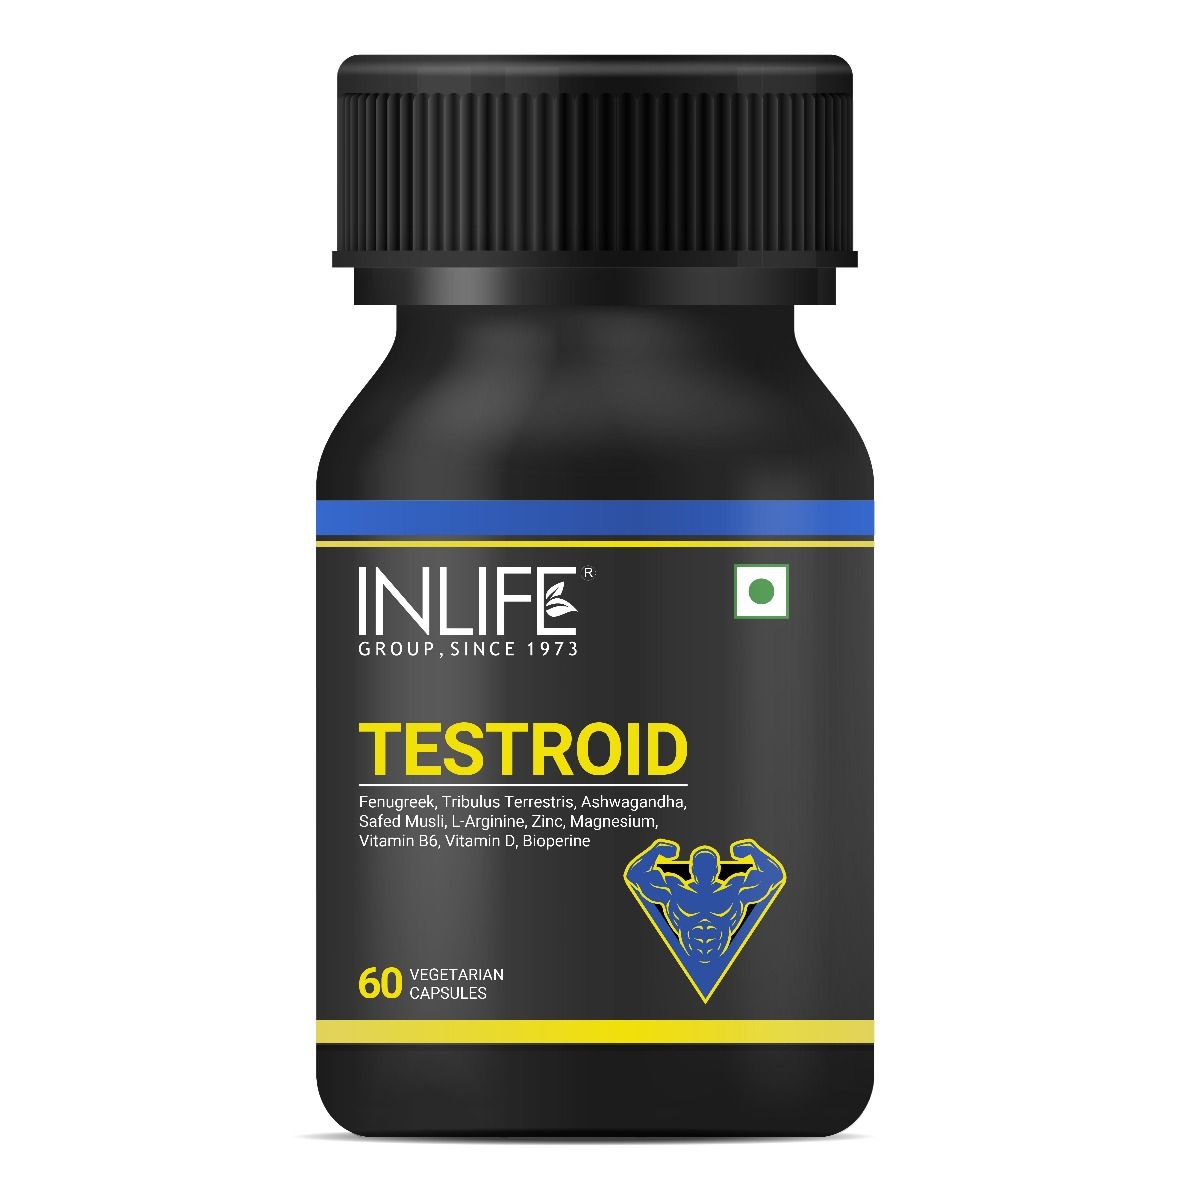 Buy Inlife Testroid, 60 Capsules Online